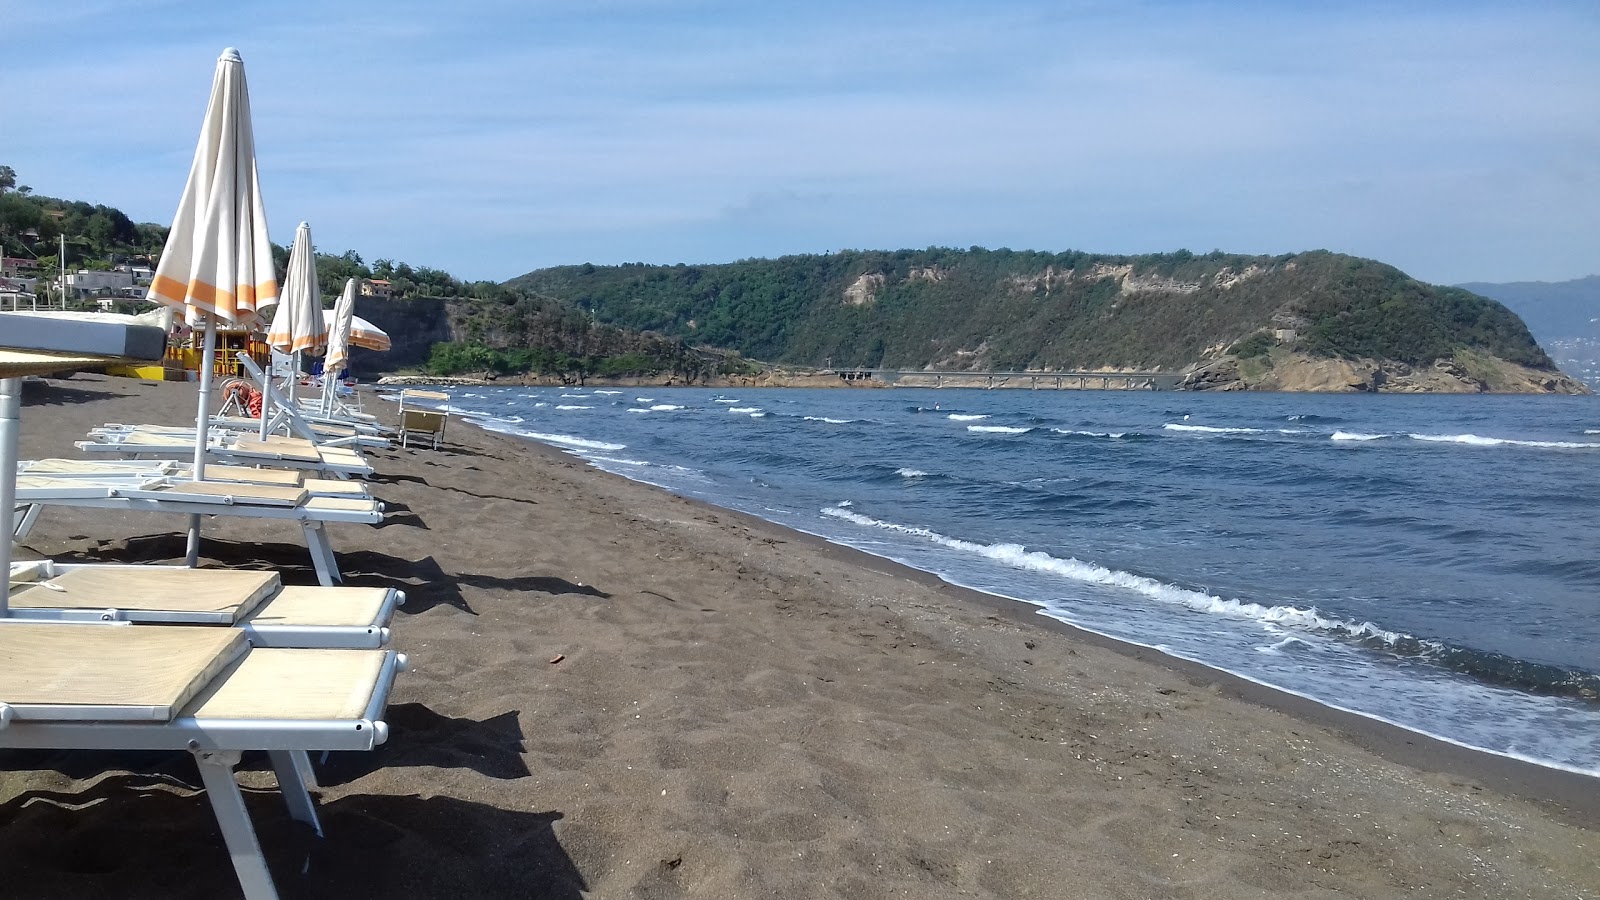 Photo of Spiaggia di Ciraccio - popular place among relax connoisseurs